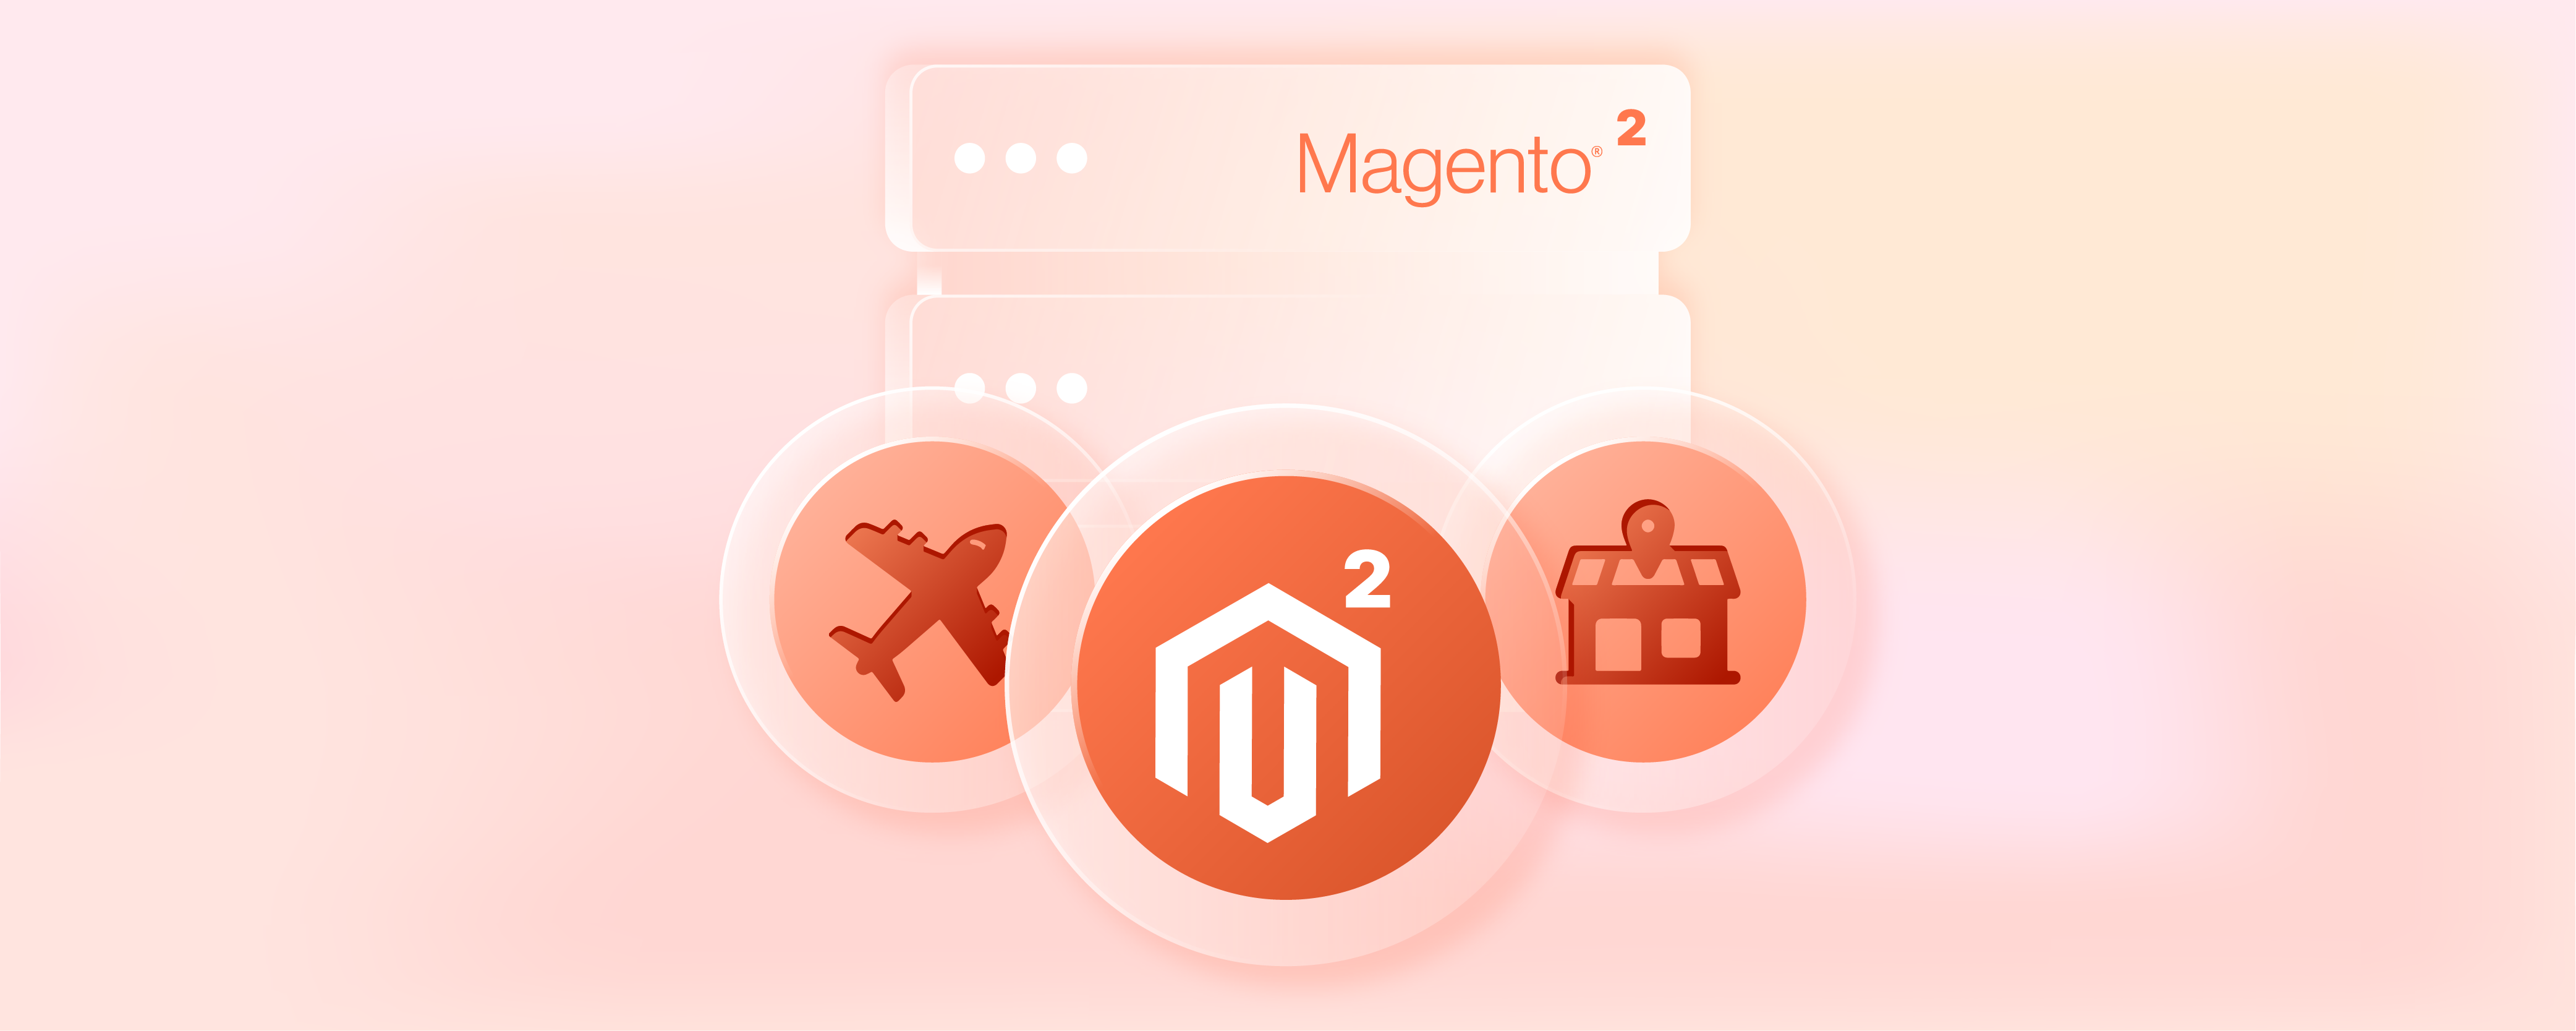 Best Hosting Magento 2: International vs. Localization Guide